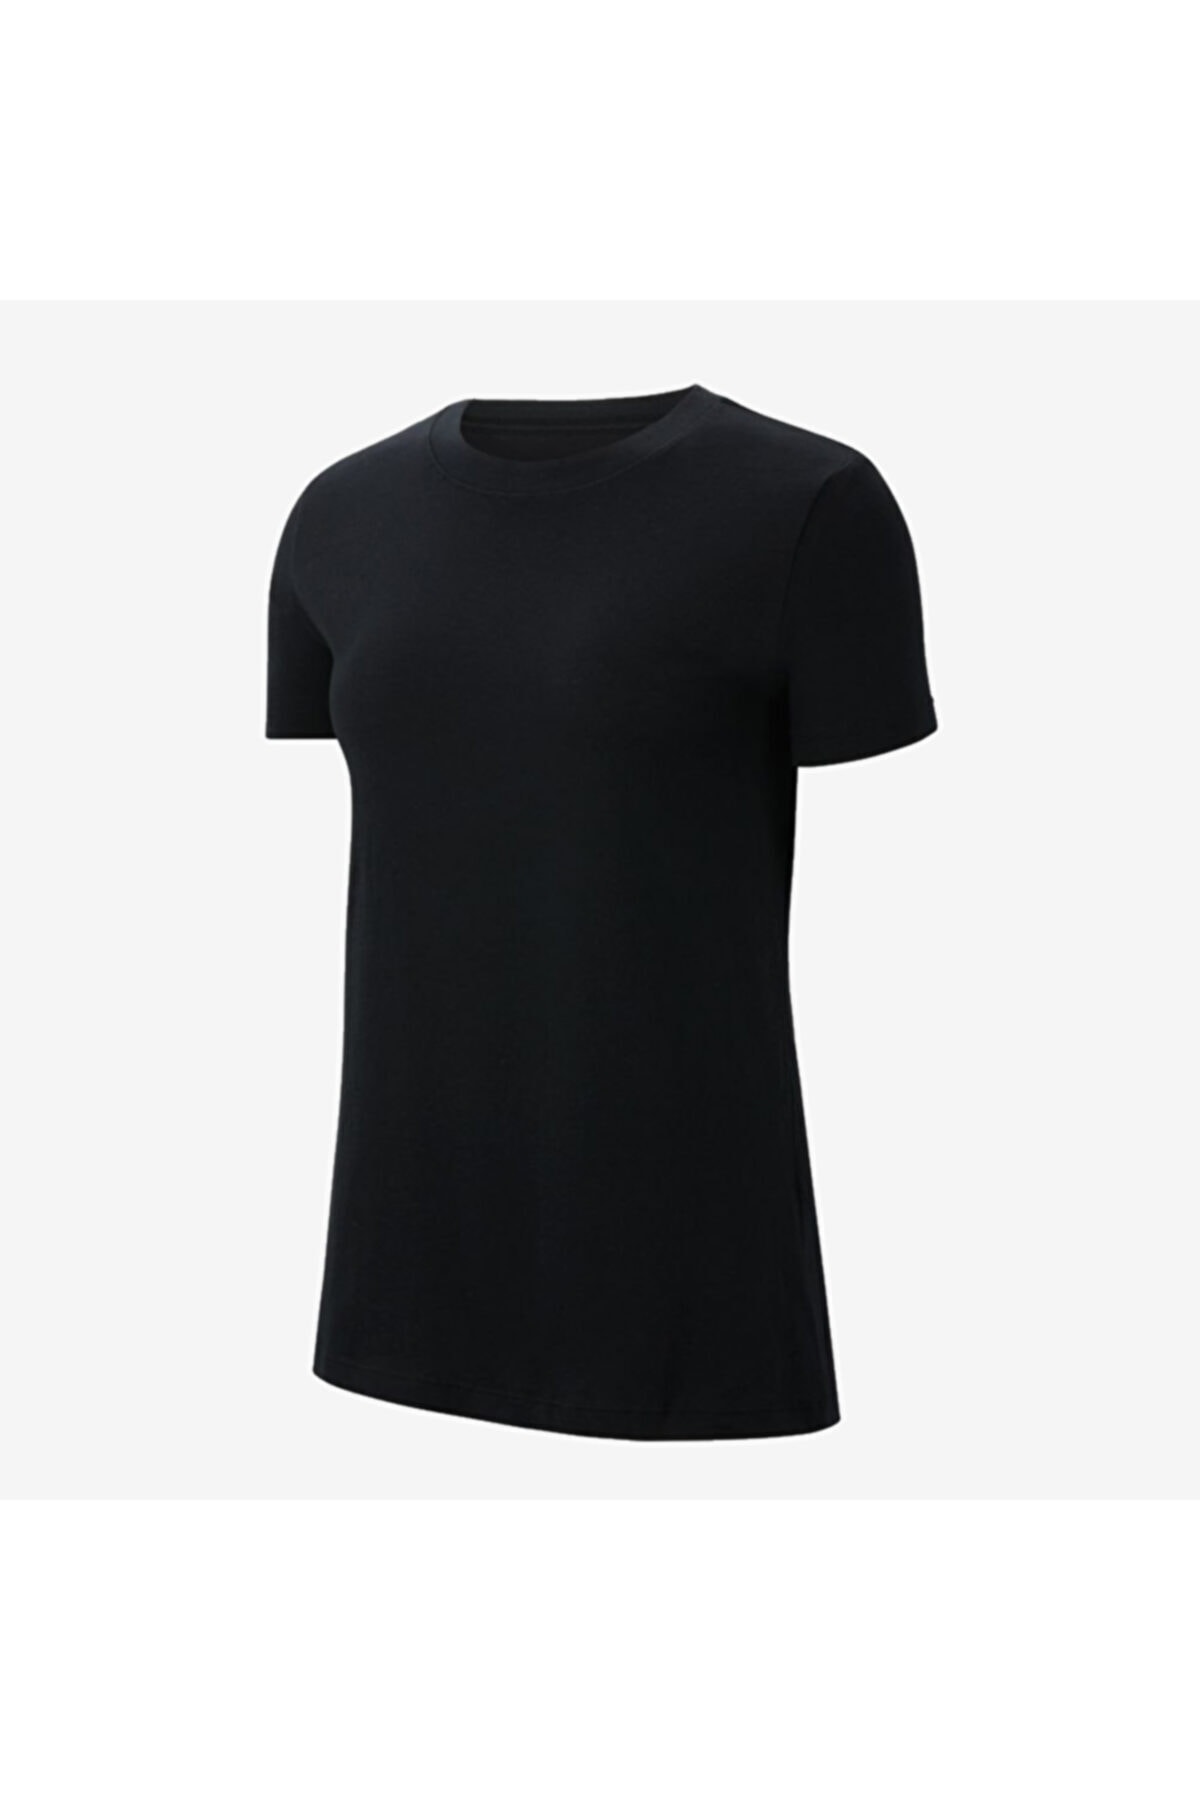 Nike Cz0903-010 W Nk Park20 Ss Tee Kadın T-shirt